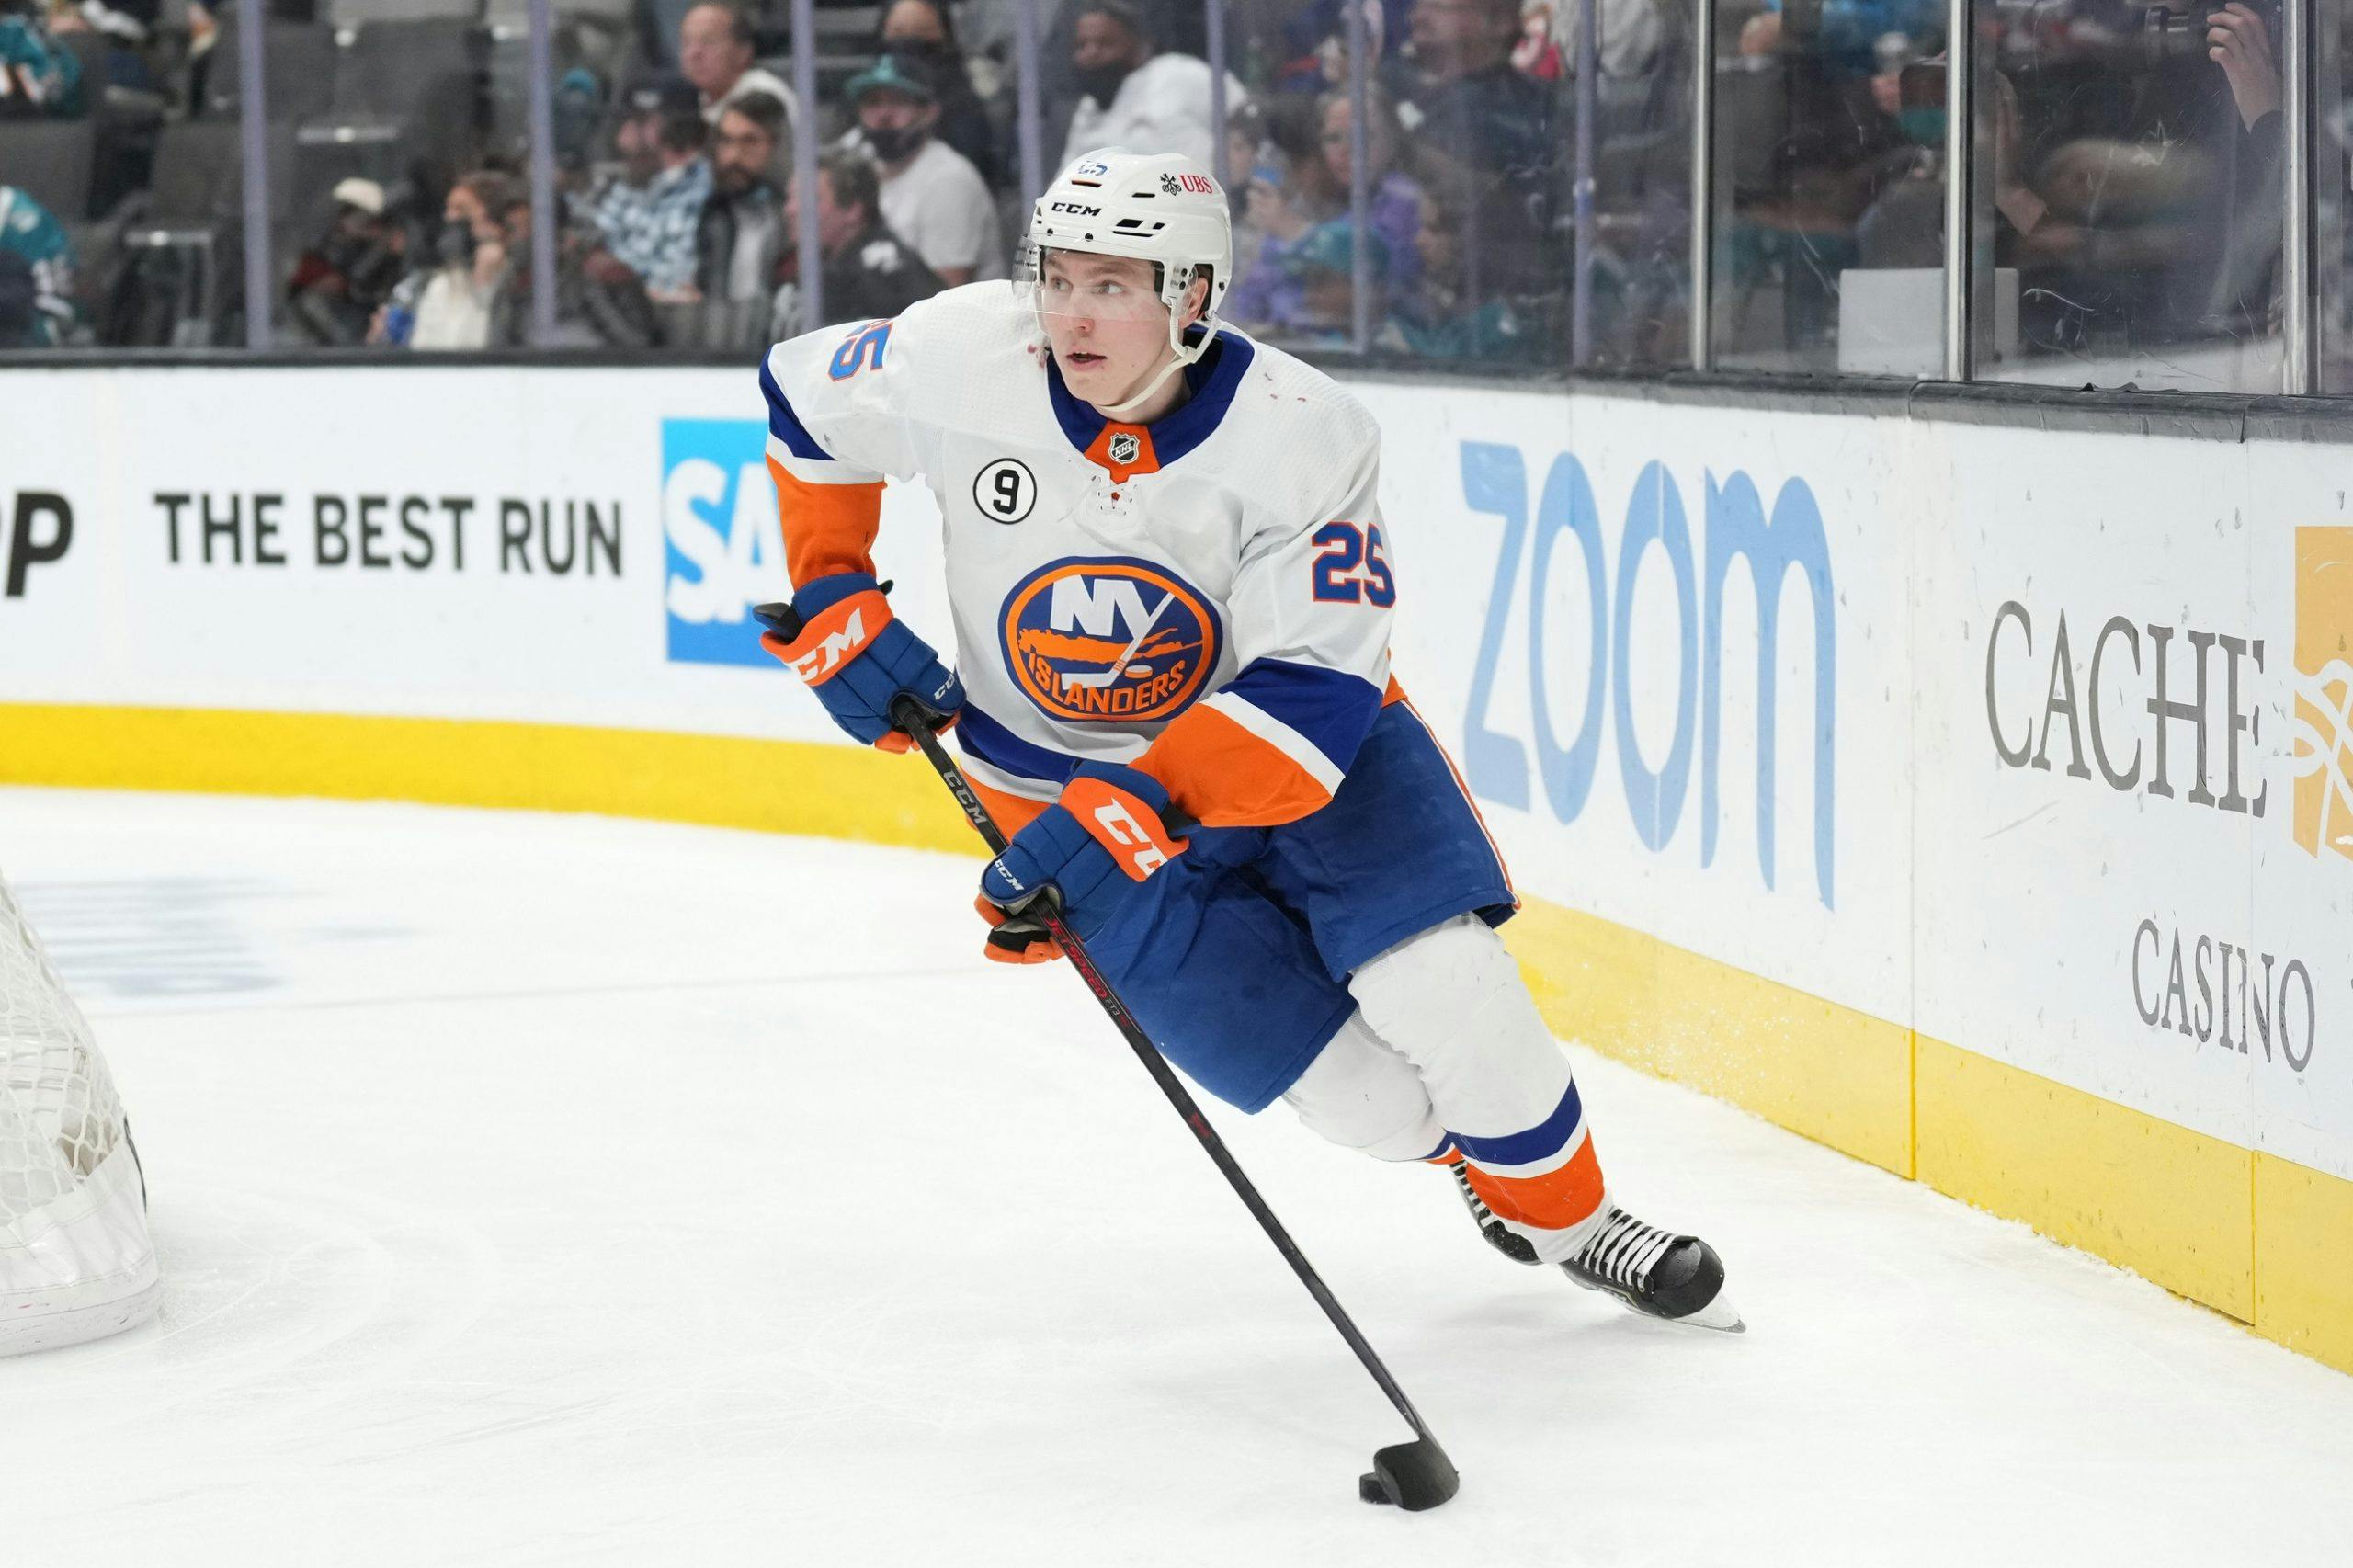 Report: New York Islanders defenseman Sebastian Aho arrested for driving under the influence